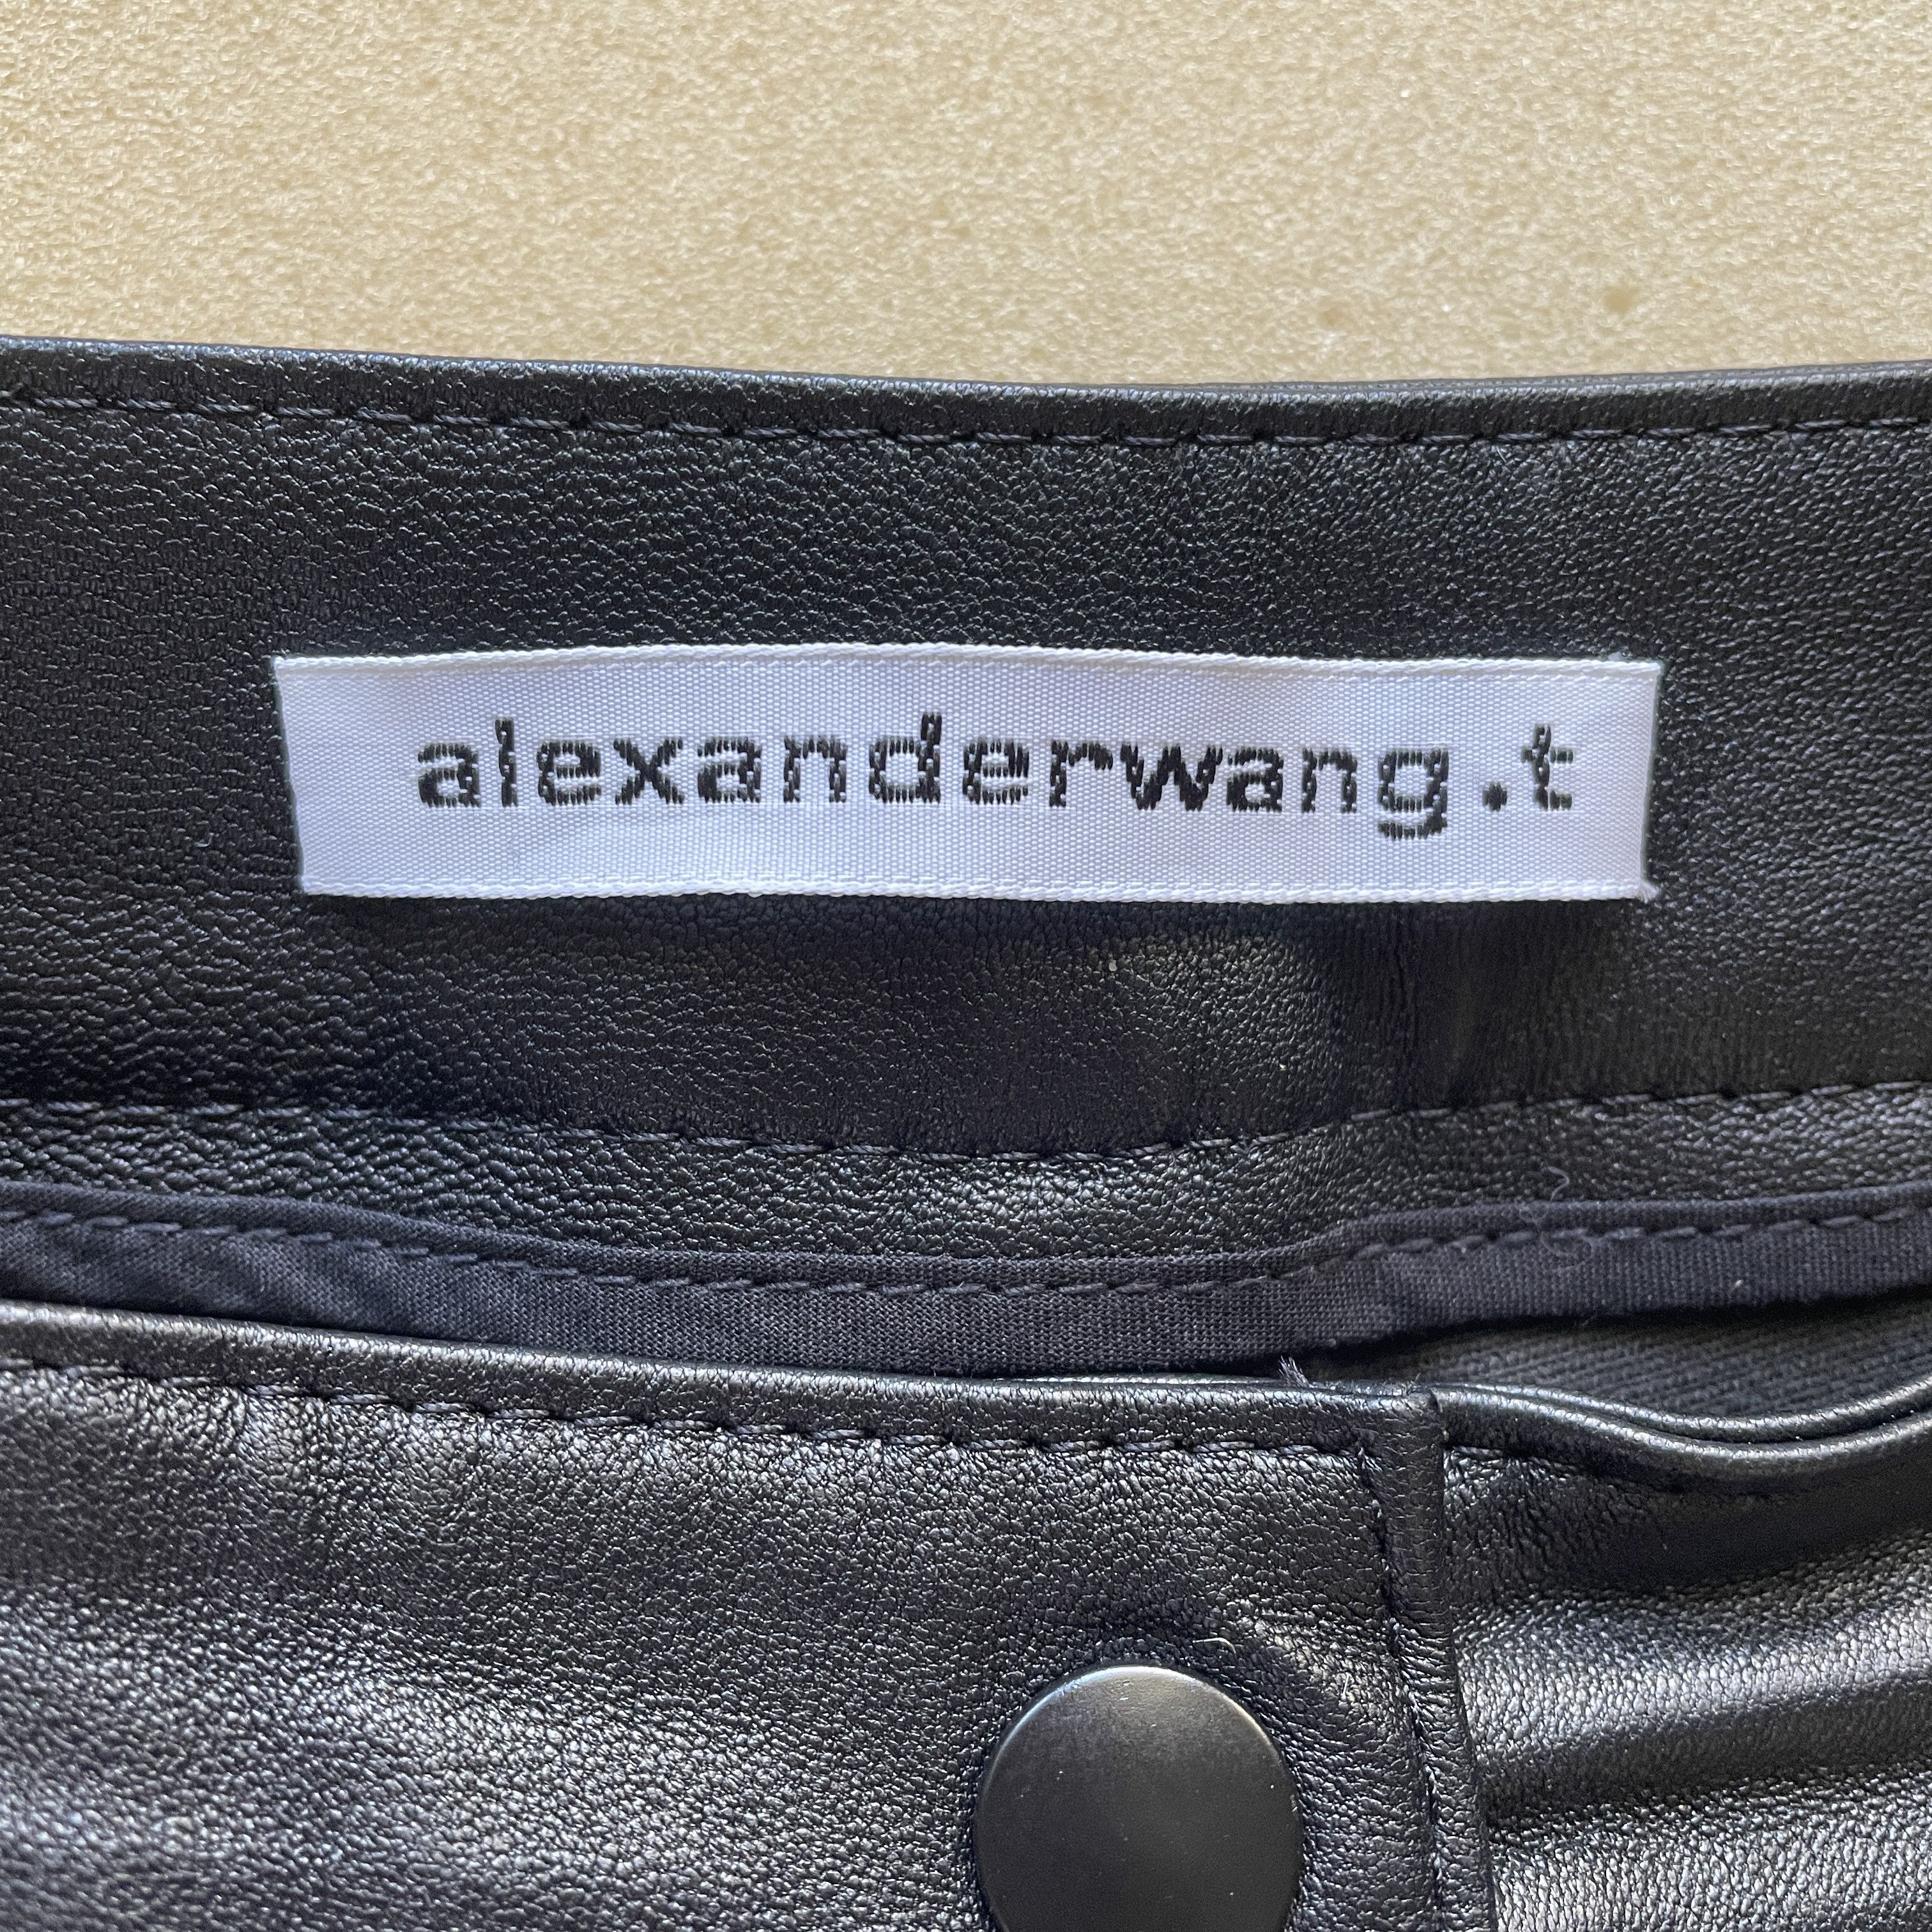 T by Alexander Wang Alexander Wang Black Stretch Leather Ruching Skinny Pants Size 28" / US 6 / IT 42 - 7 Thumbnail